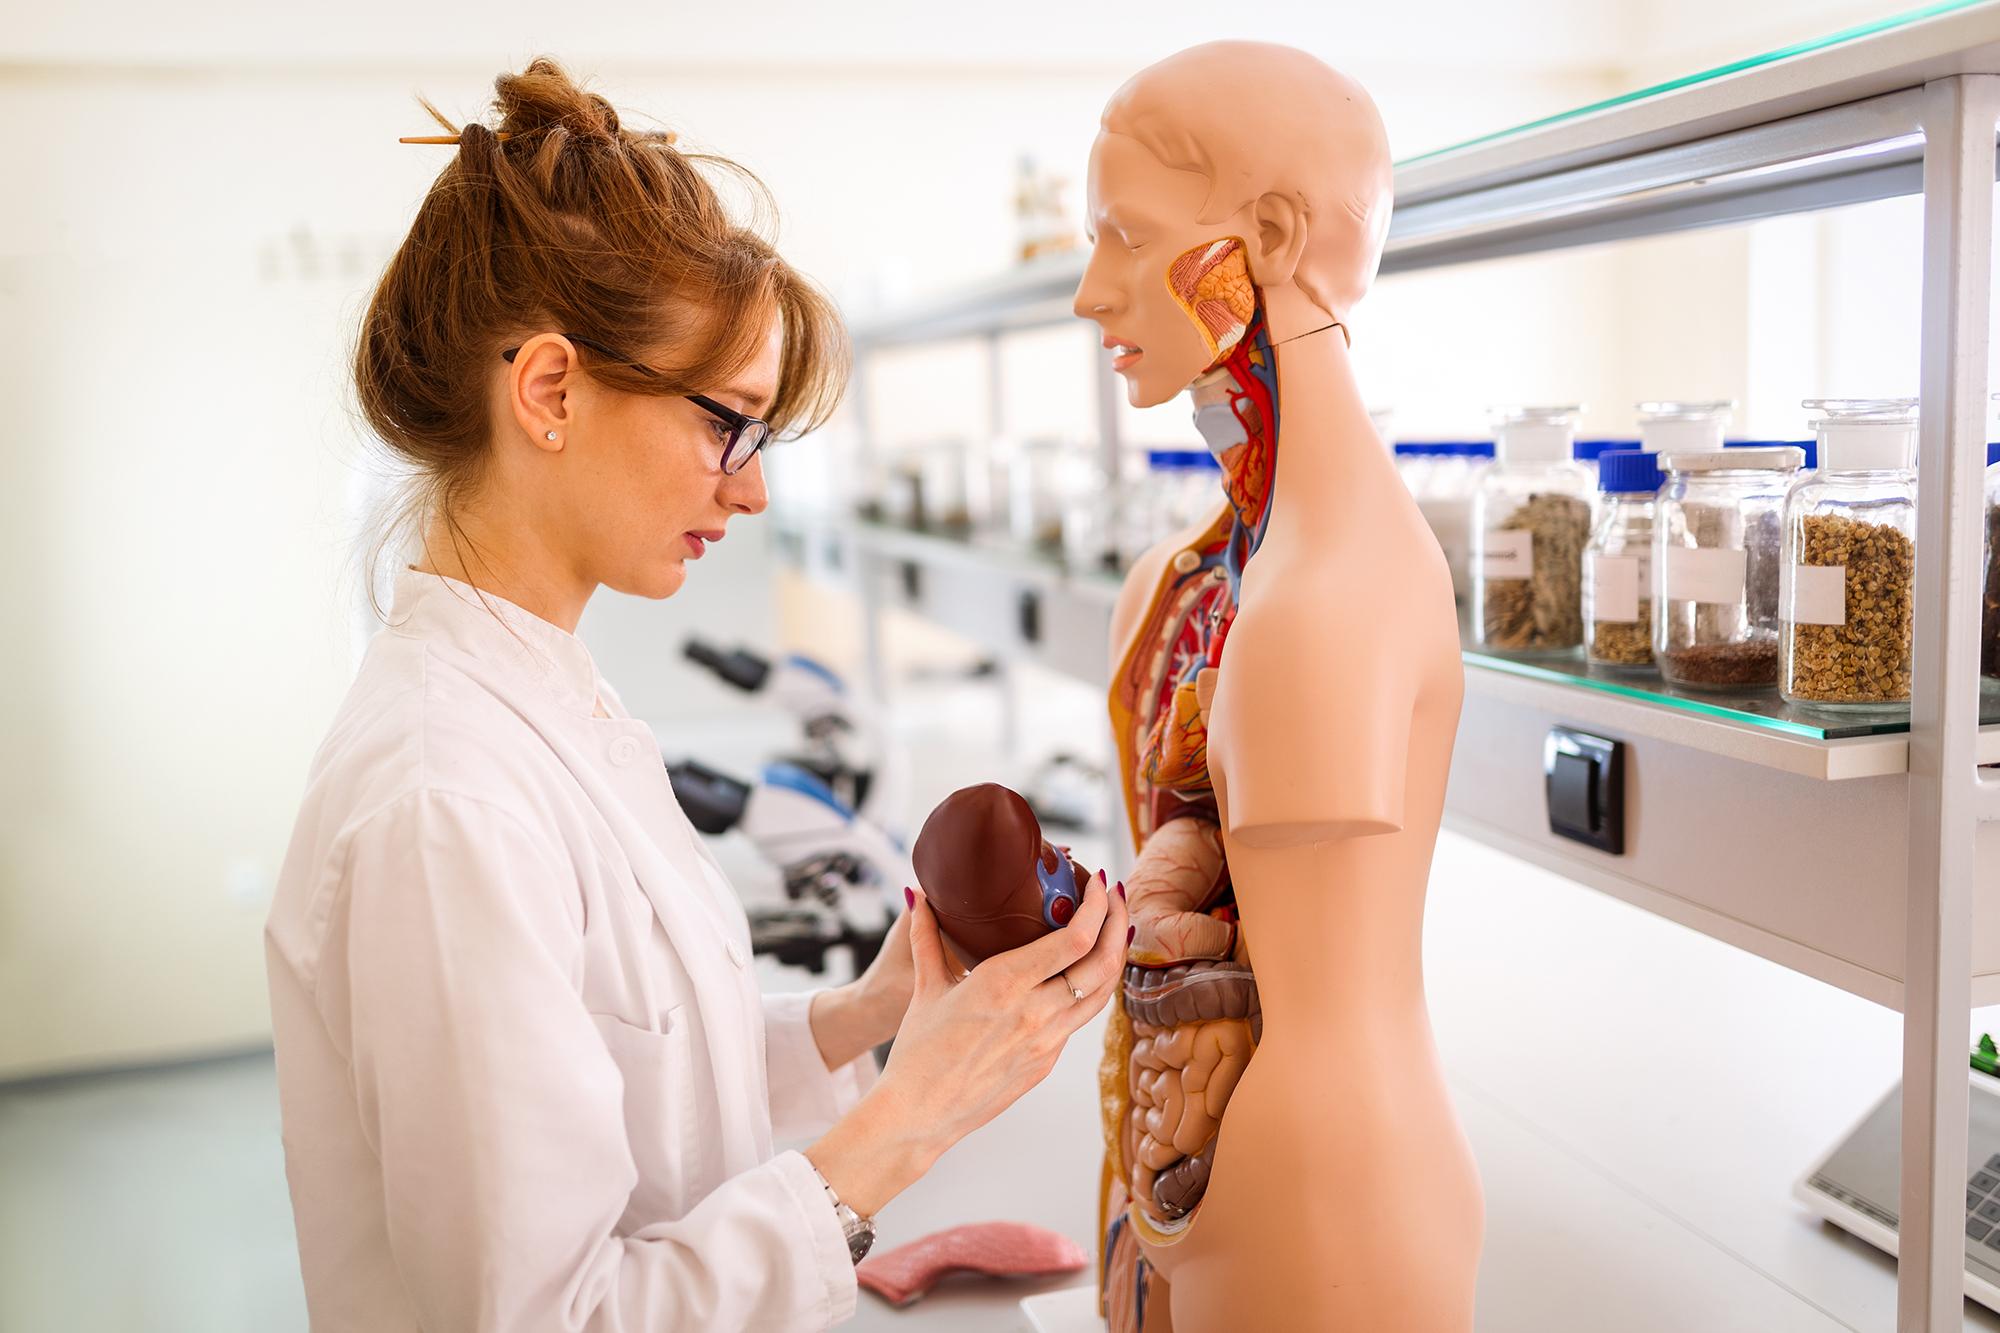 A medical student examining an anatomical model